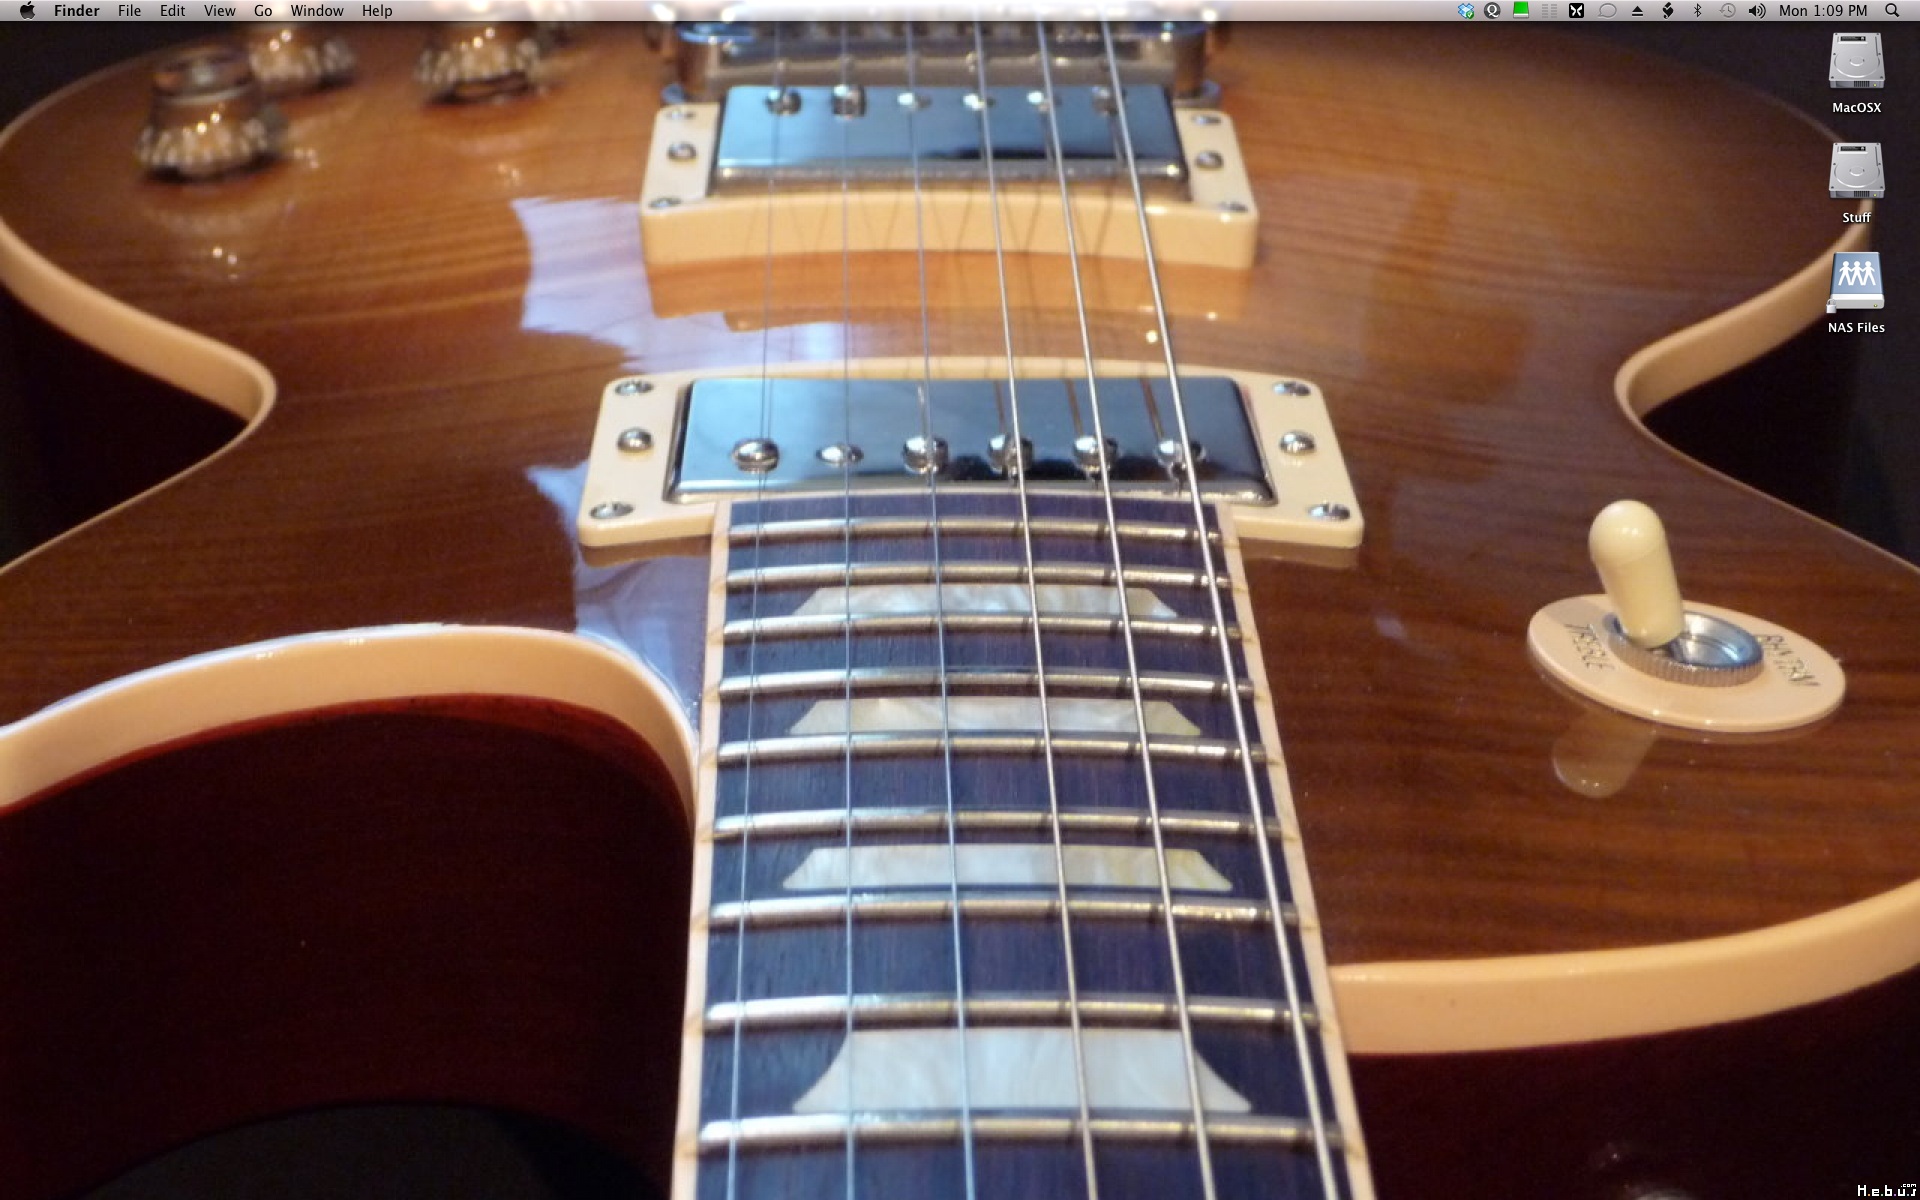 Pin Guitar Wallpaper Gibson